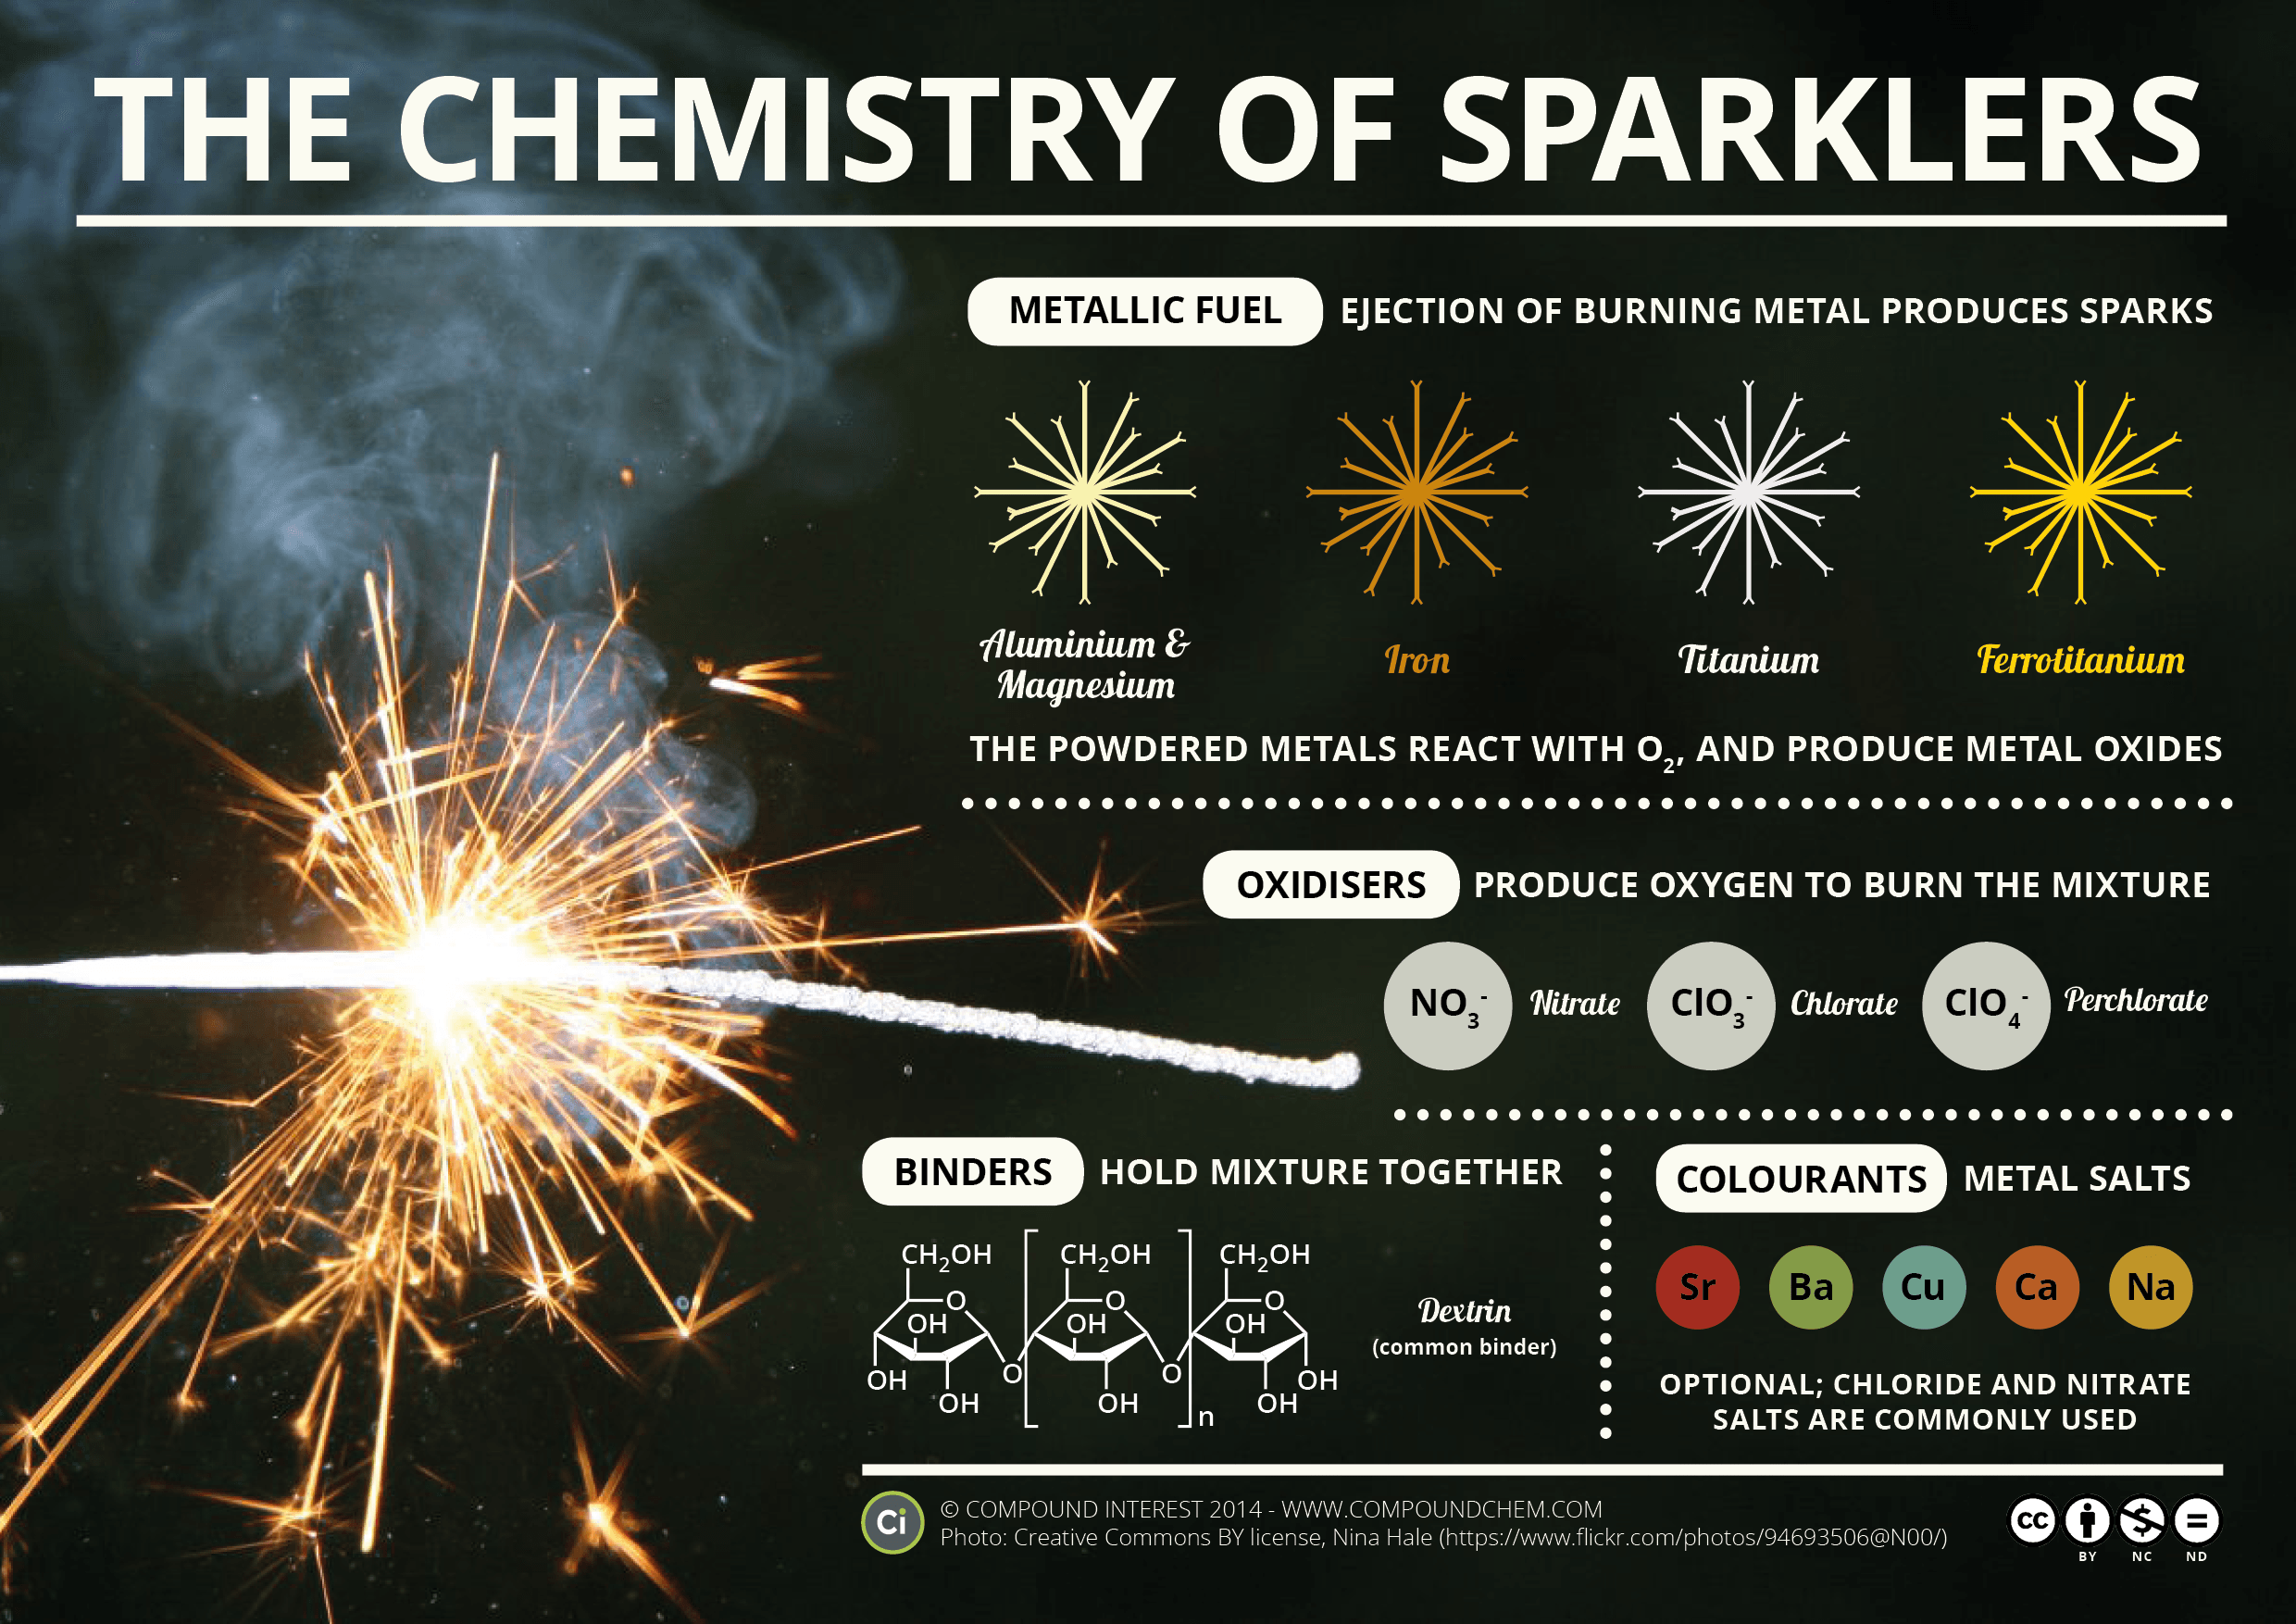 How Does A Sparkler Work?